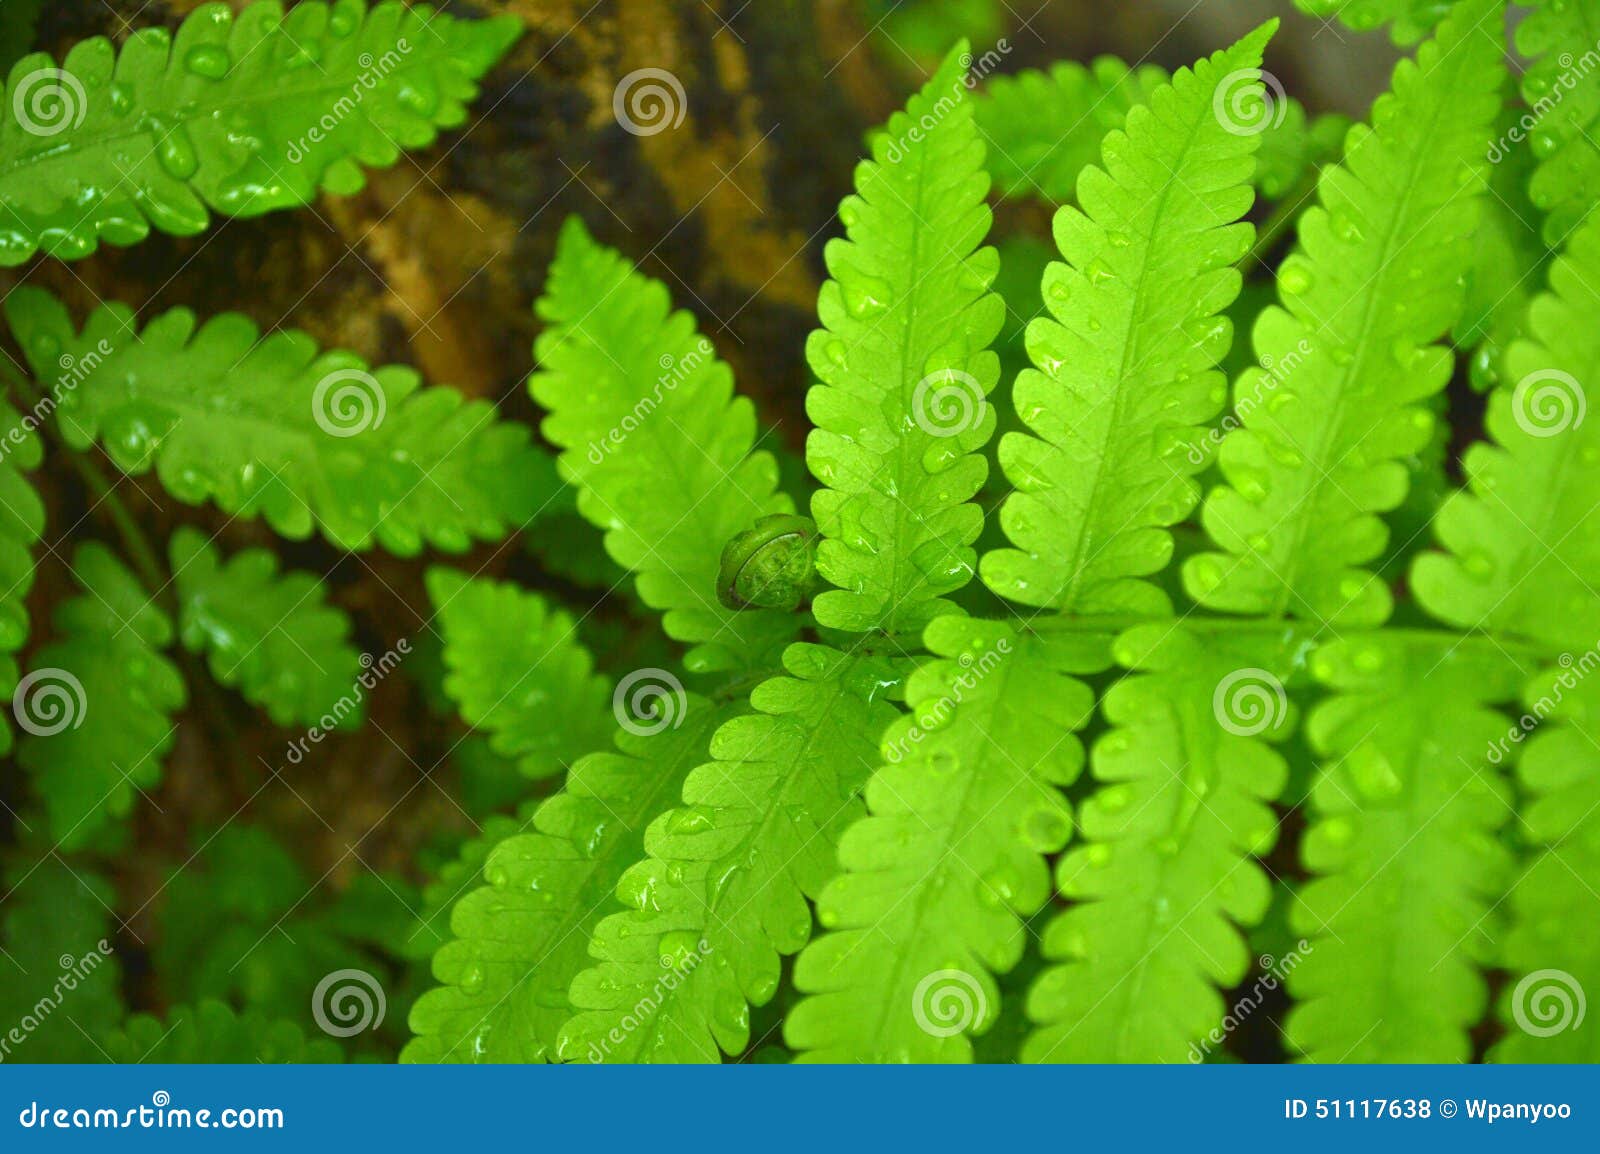 vegetable fern